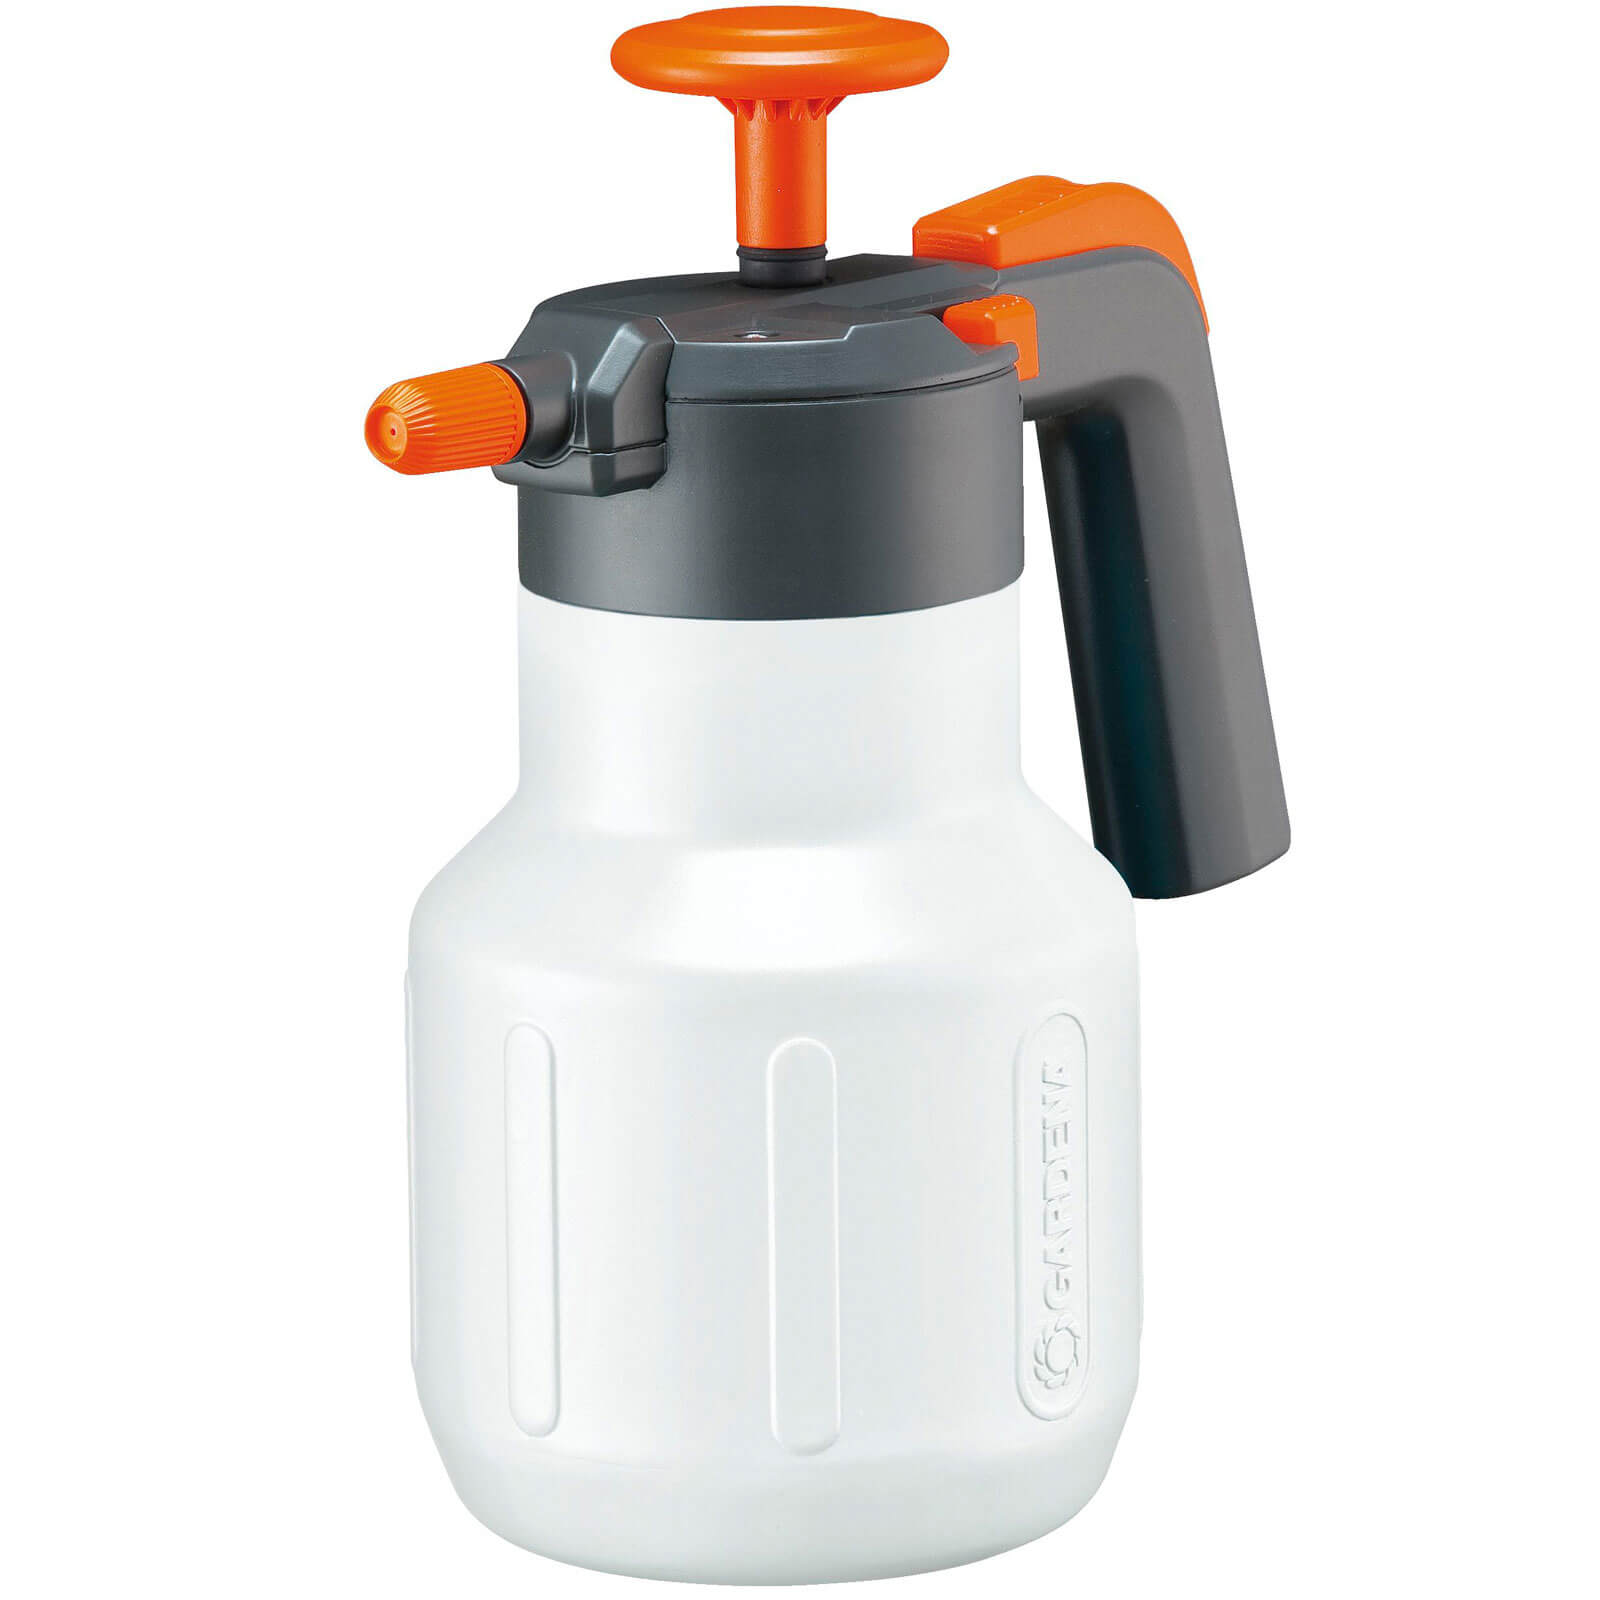 Gardena Translucent Comfort 1.25 Litre Pressure Water Sprayer